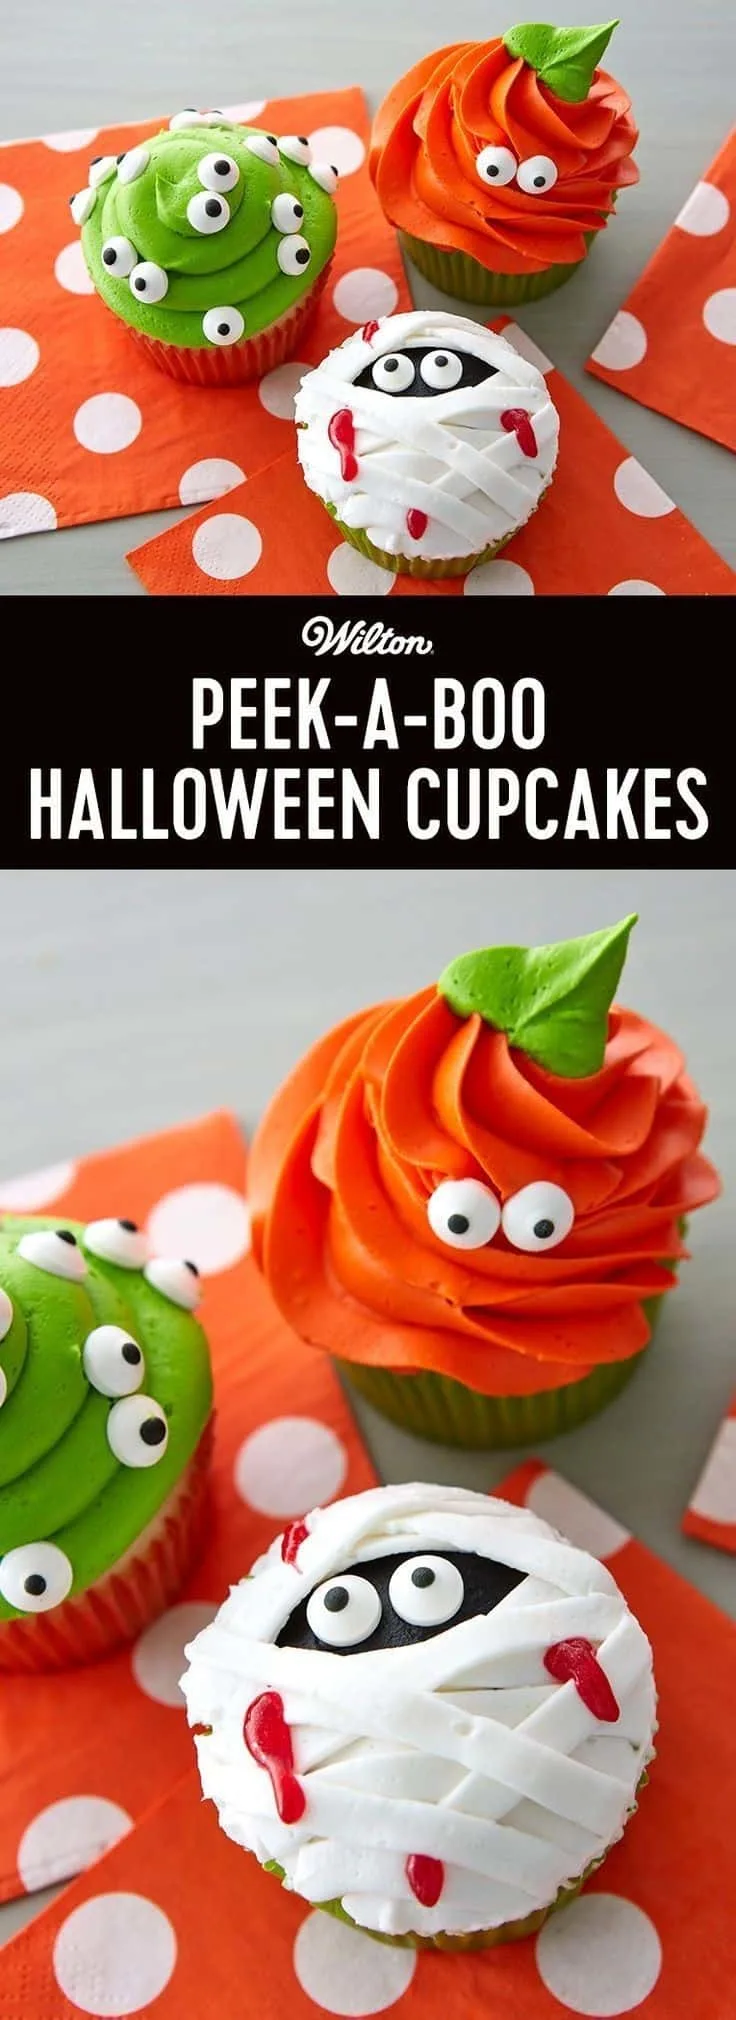 Peek-A-Boo Halloween Cupcakes